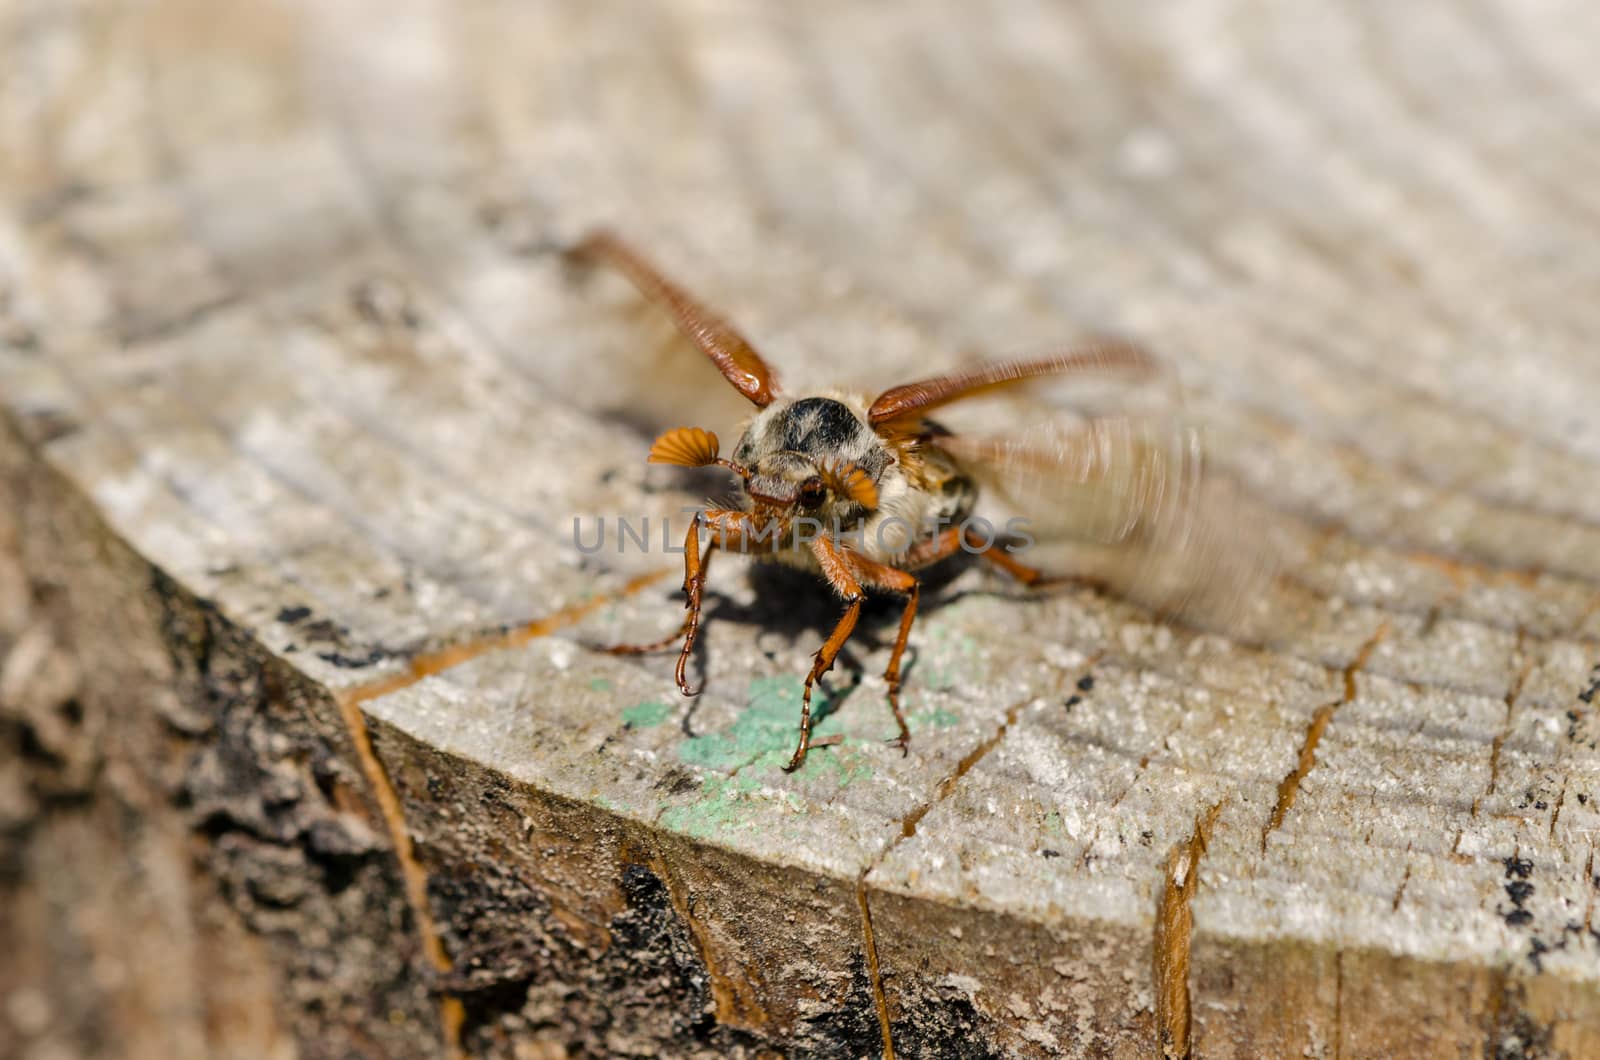 stump edge crawl beetle bug spread wings try fly by sauletas